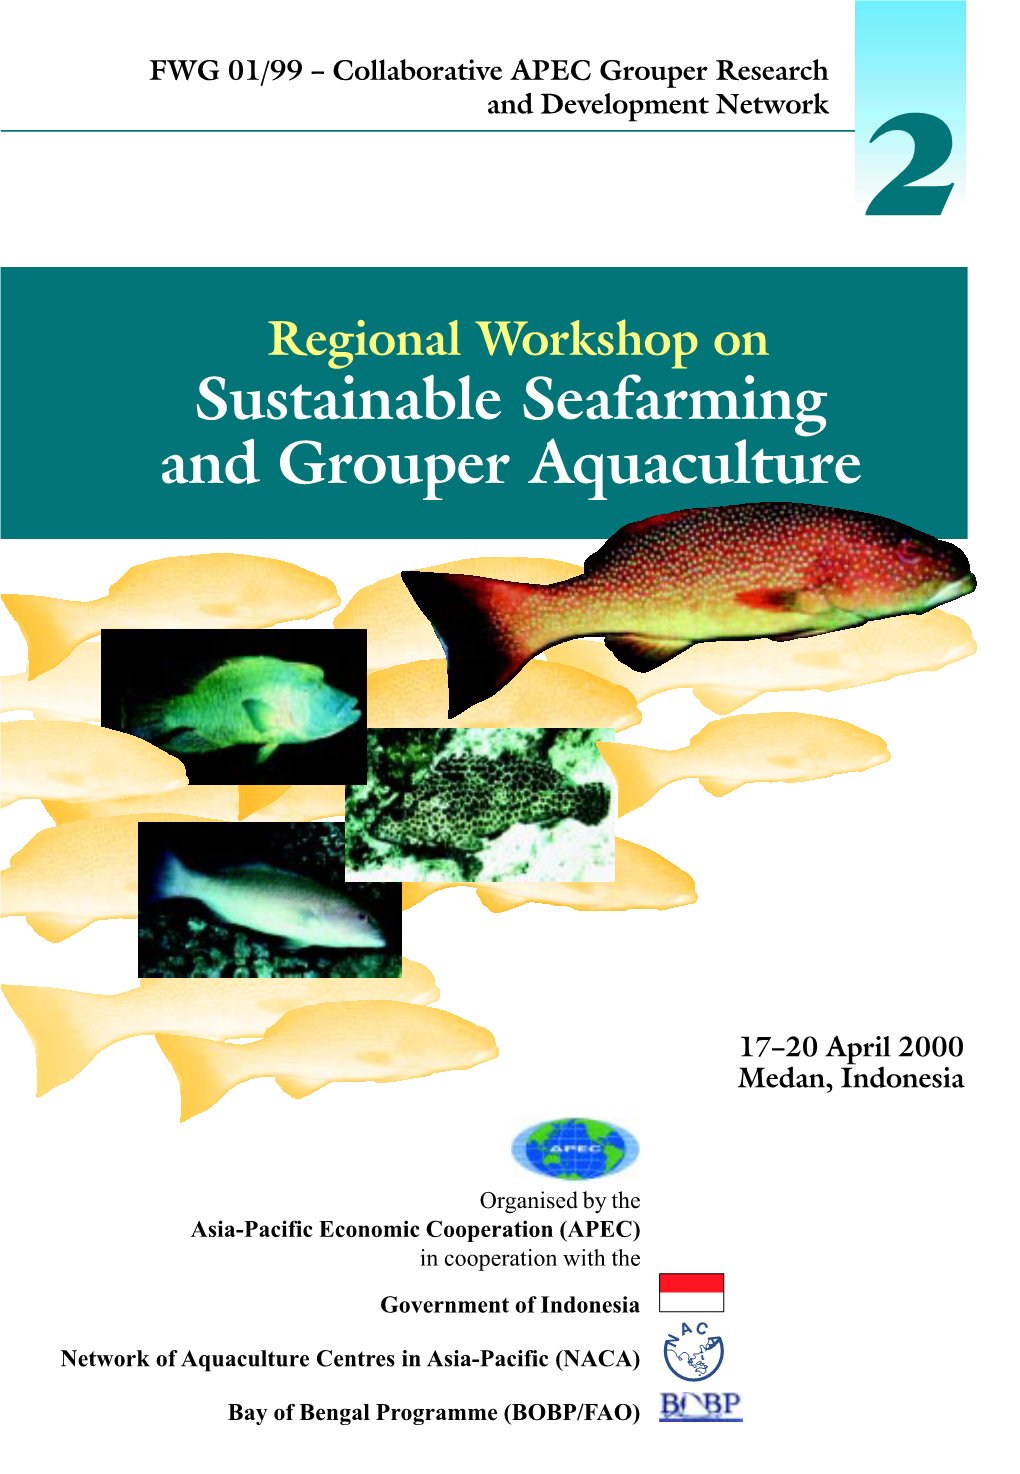 Regional Workshop on Sustainable Seafarming and Grouper Aquaculture